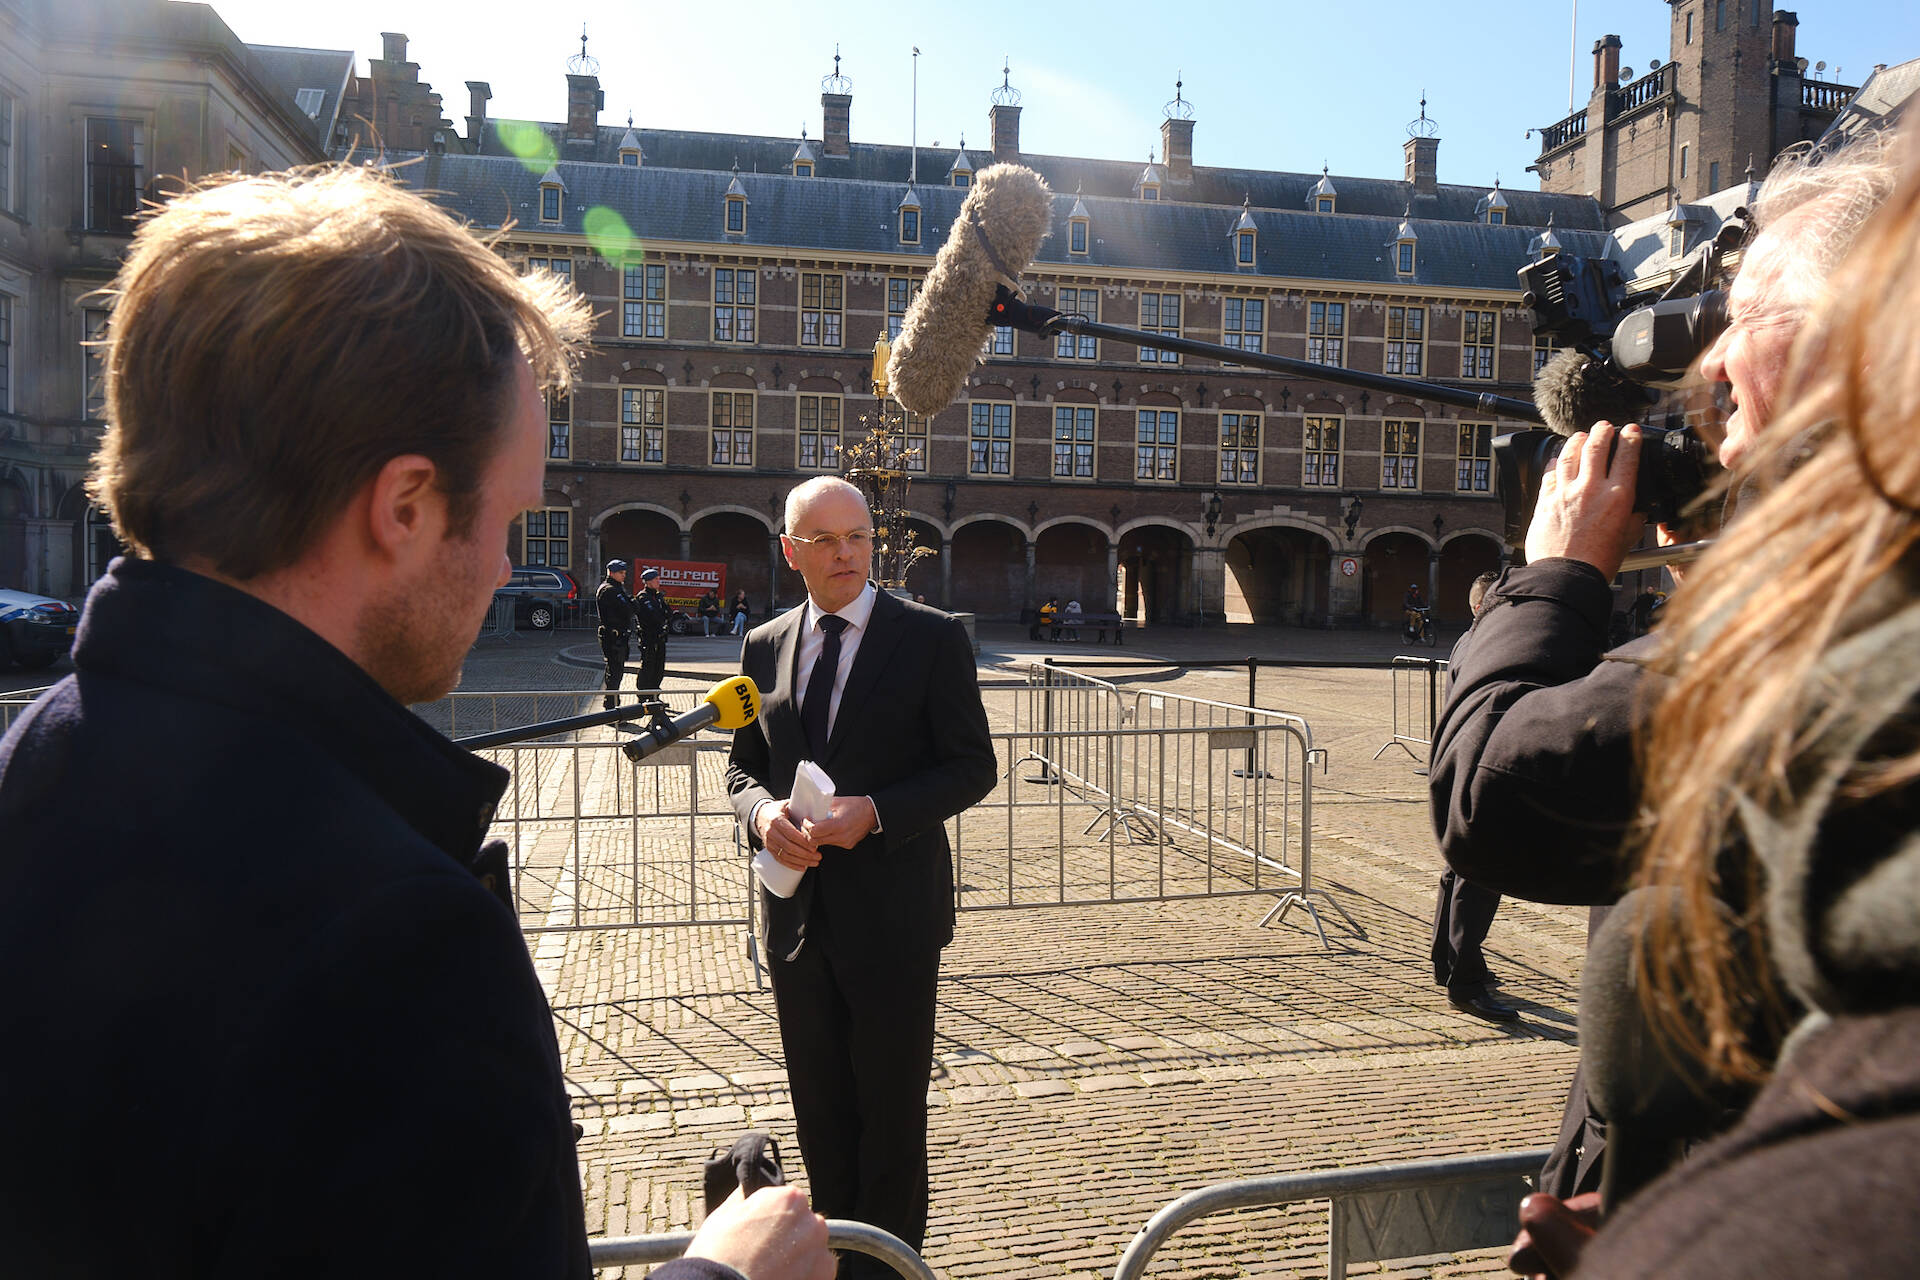 Media wacht Eerste Kamervoorzitter Jan Anthonie Bruijn op voorafgaand aan gesprek met verkenners.